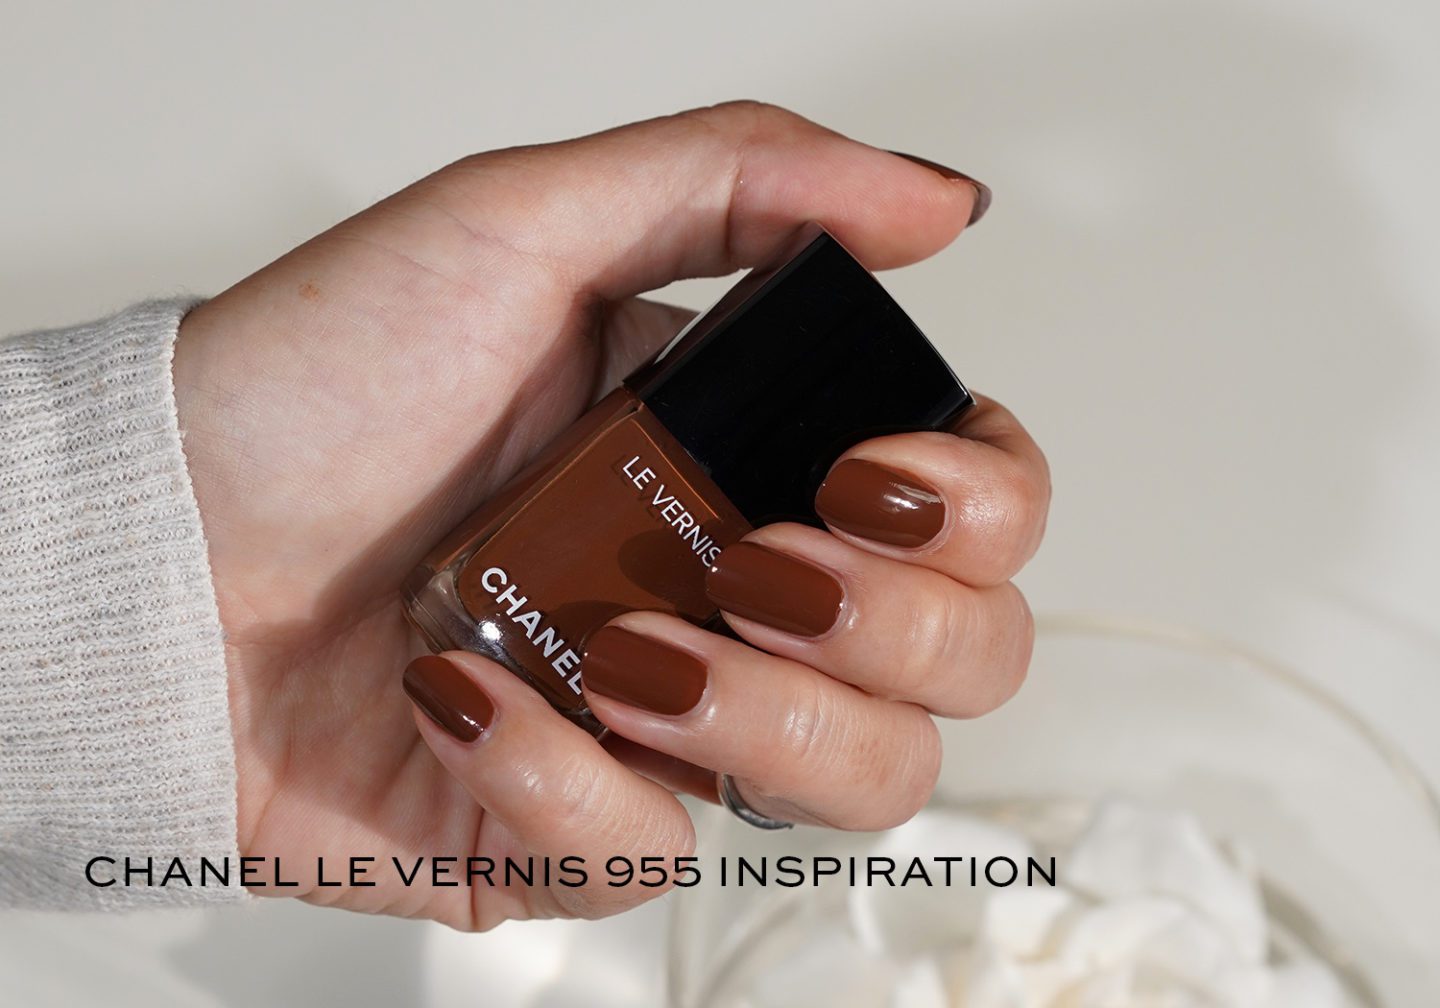 Chanel Le Vernis Inspiration